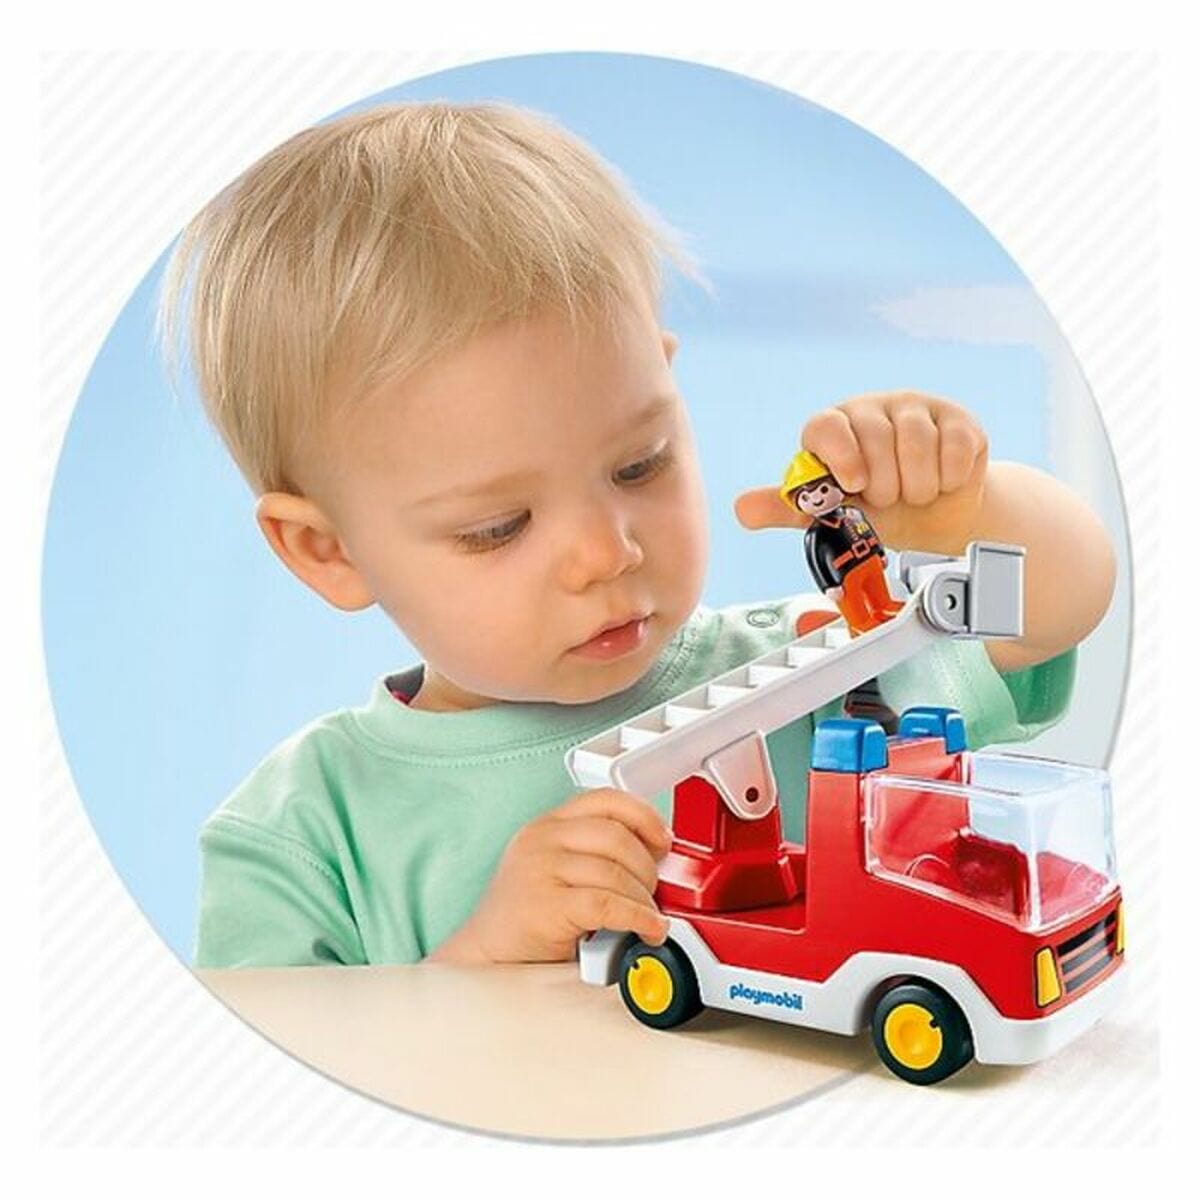 Playmobil Spielzeug | Kostüme > Spielzeug und Spiele > Weiteres spielzeug Playset 1.2.3 Fire Truck Playmobil 6967